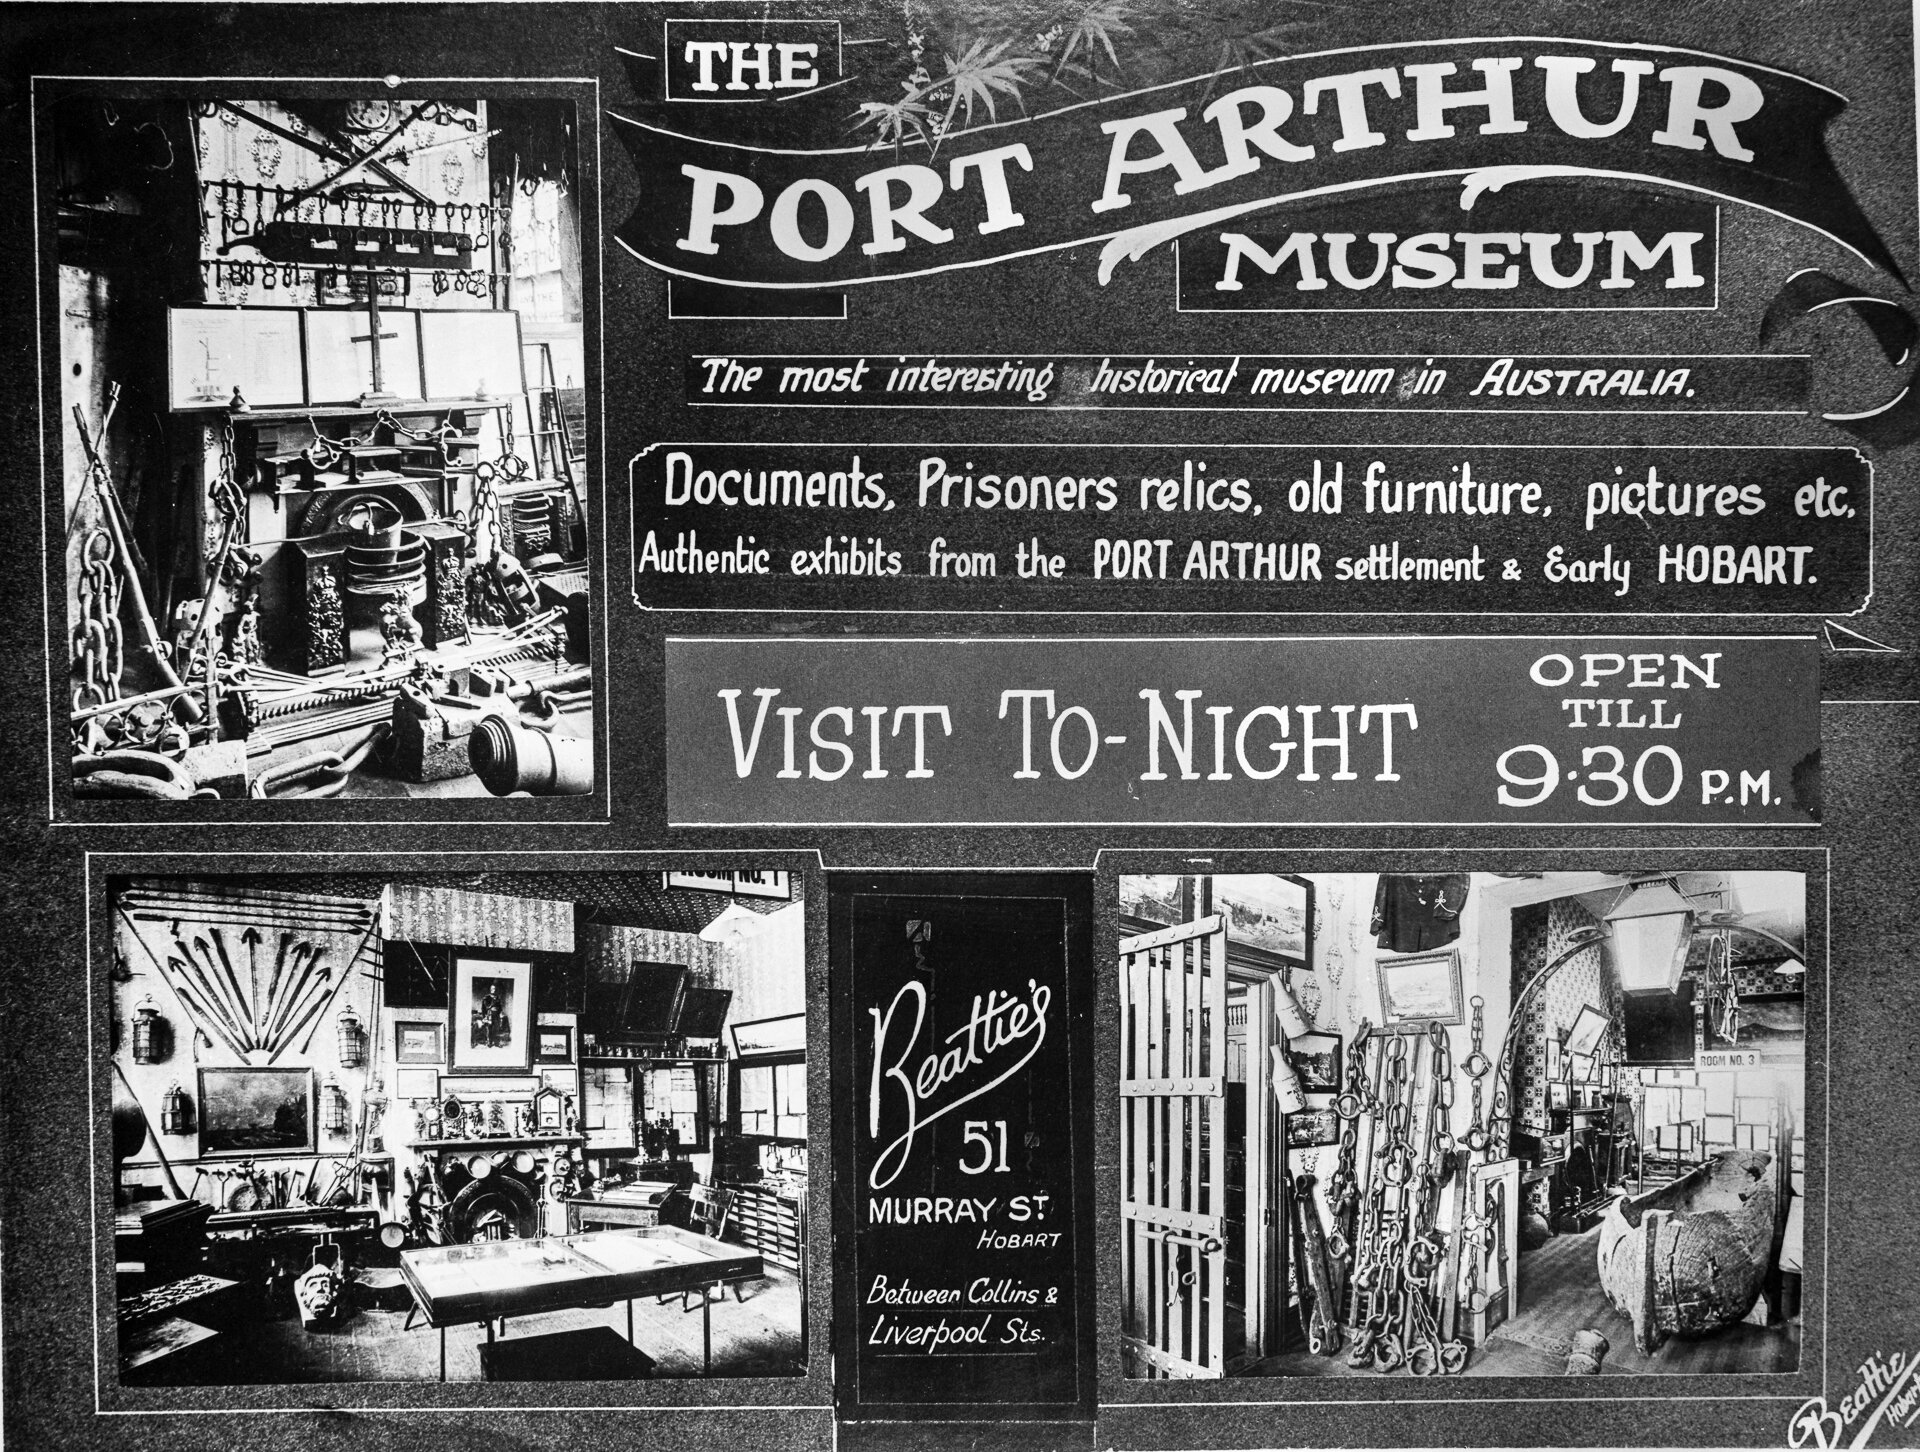 The Port Arthur museum